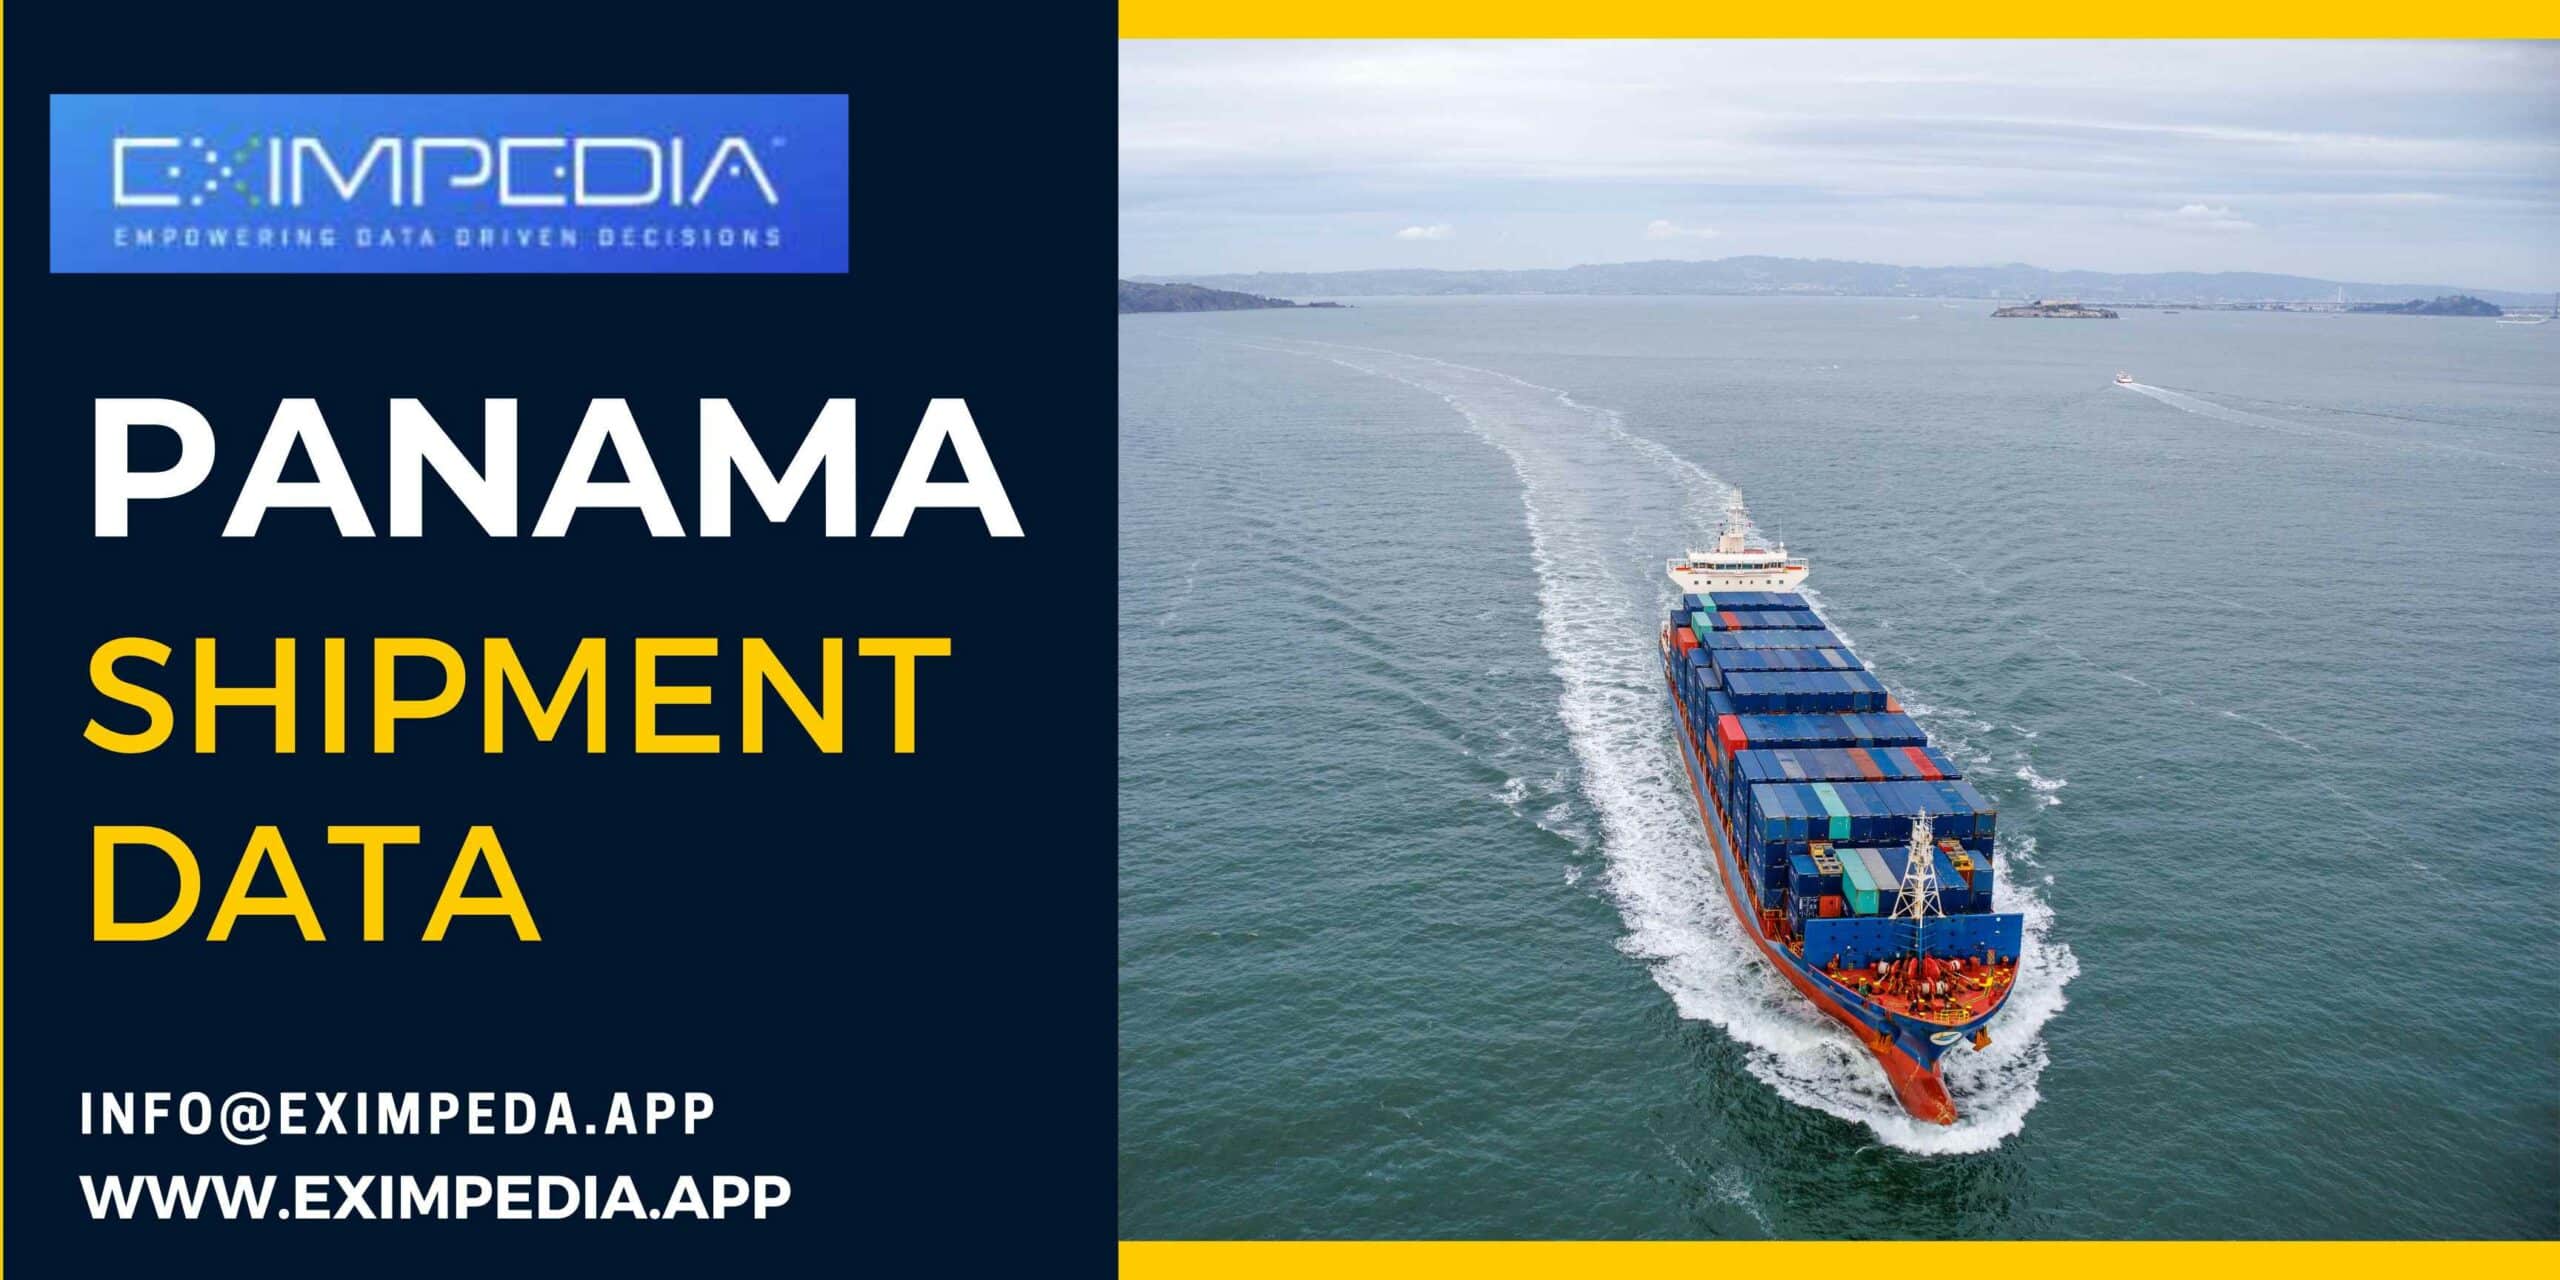 Panama Shipment Data - Eximpedia